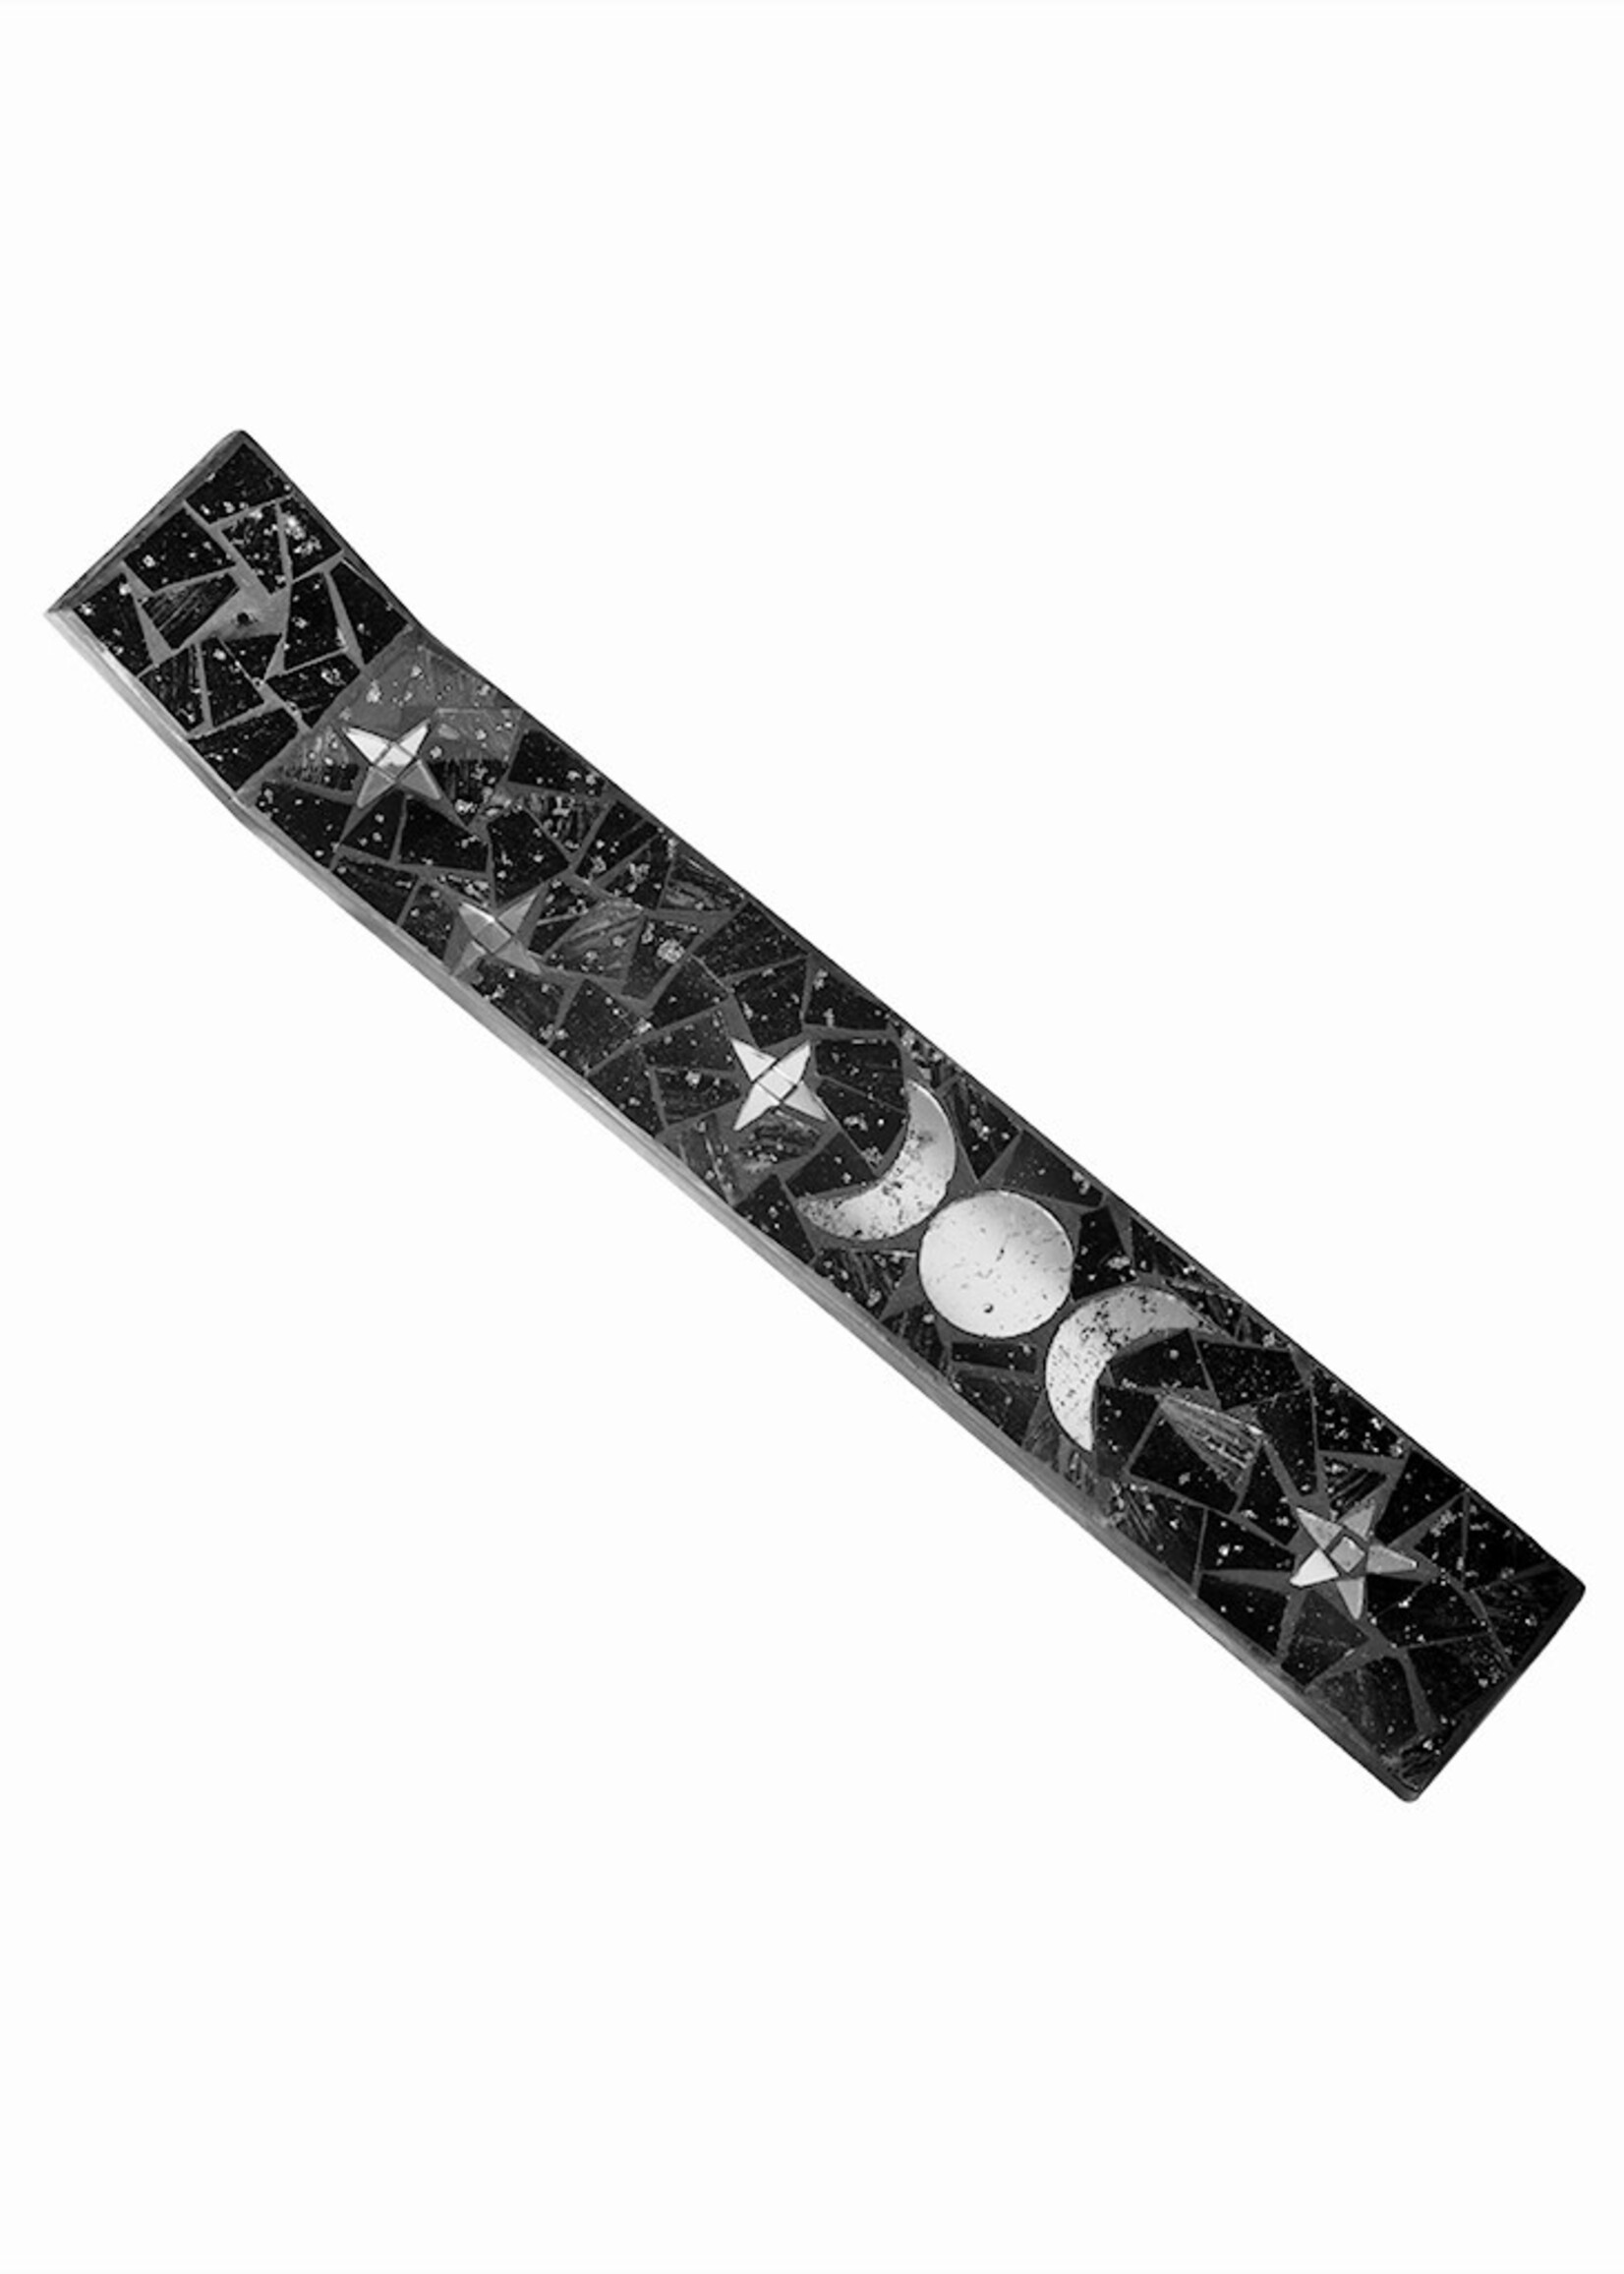 Kheops Glass Mosaic Incense Holder Triple Moon